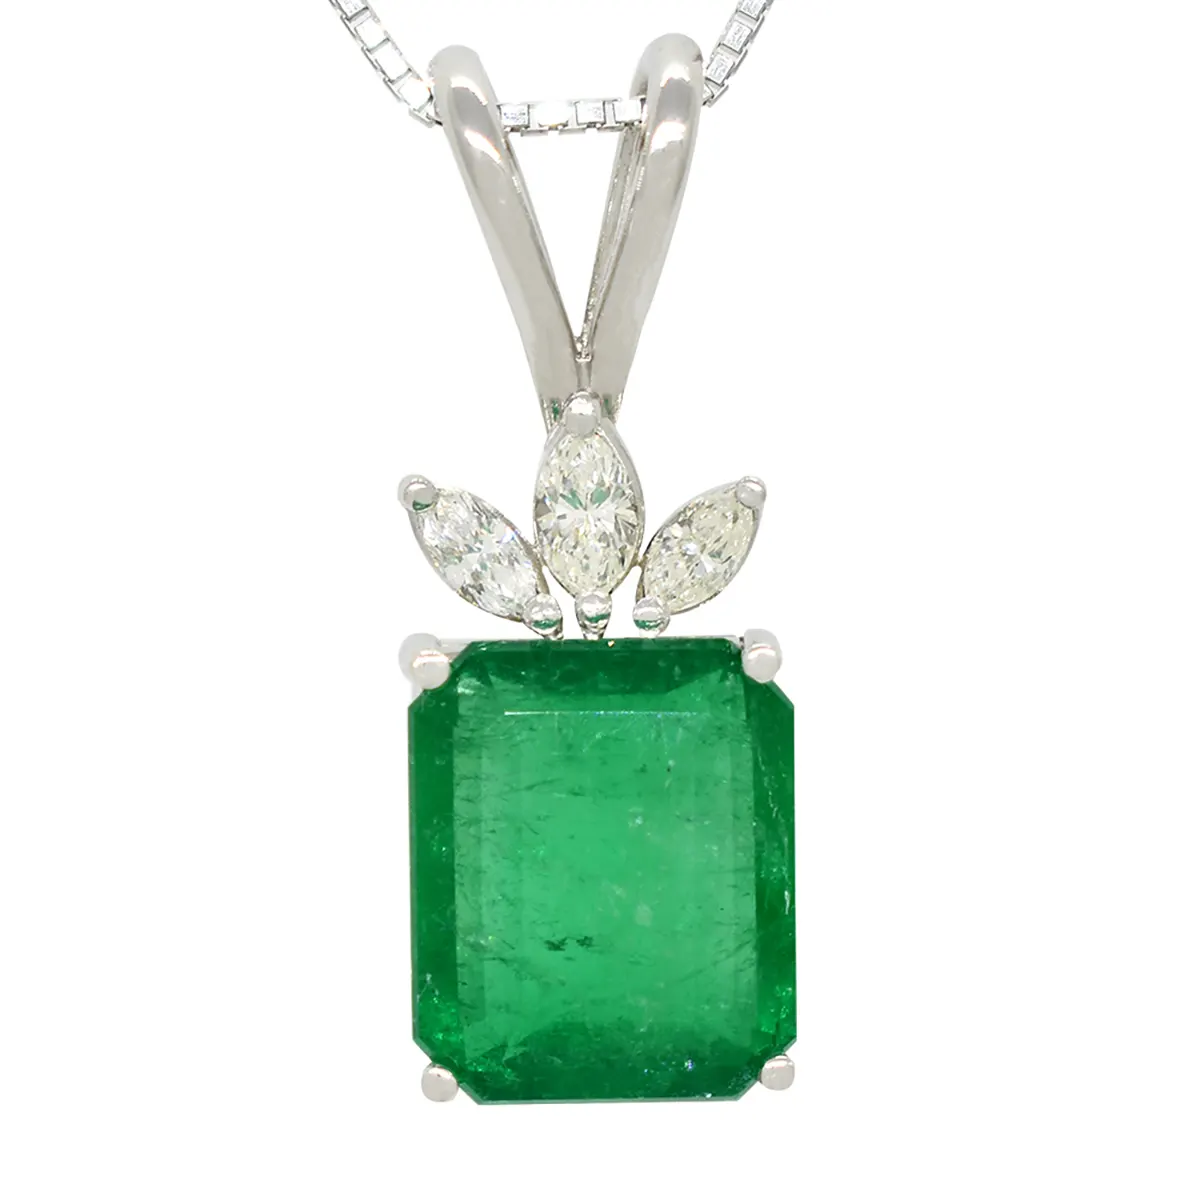 Emerald and Diamond Pendant in 18K White Gold With Emerald Cut Emerald and Marquise Shape Diamonds